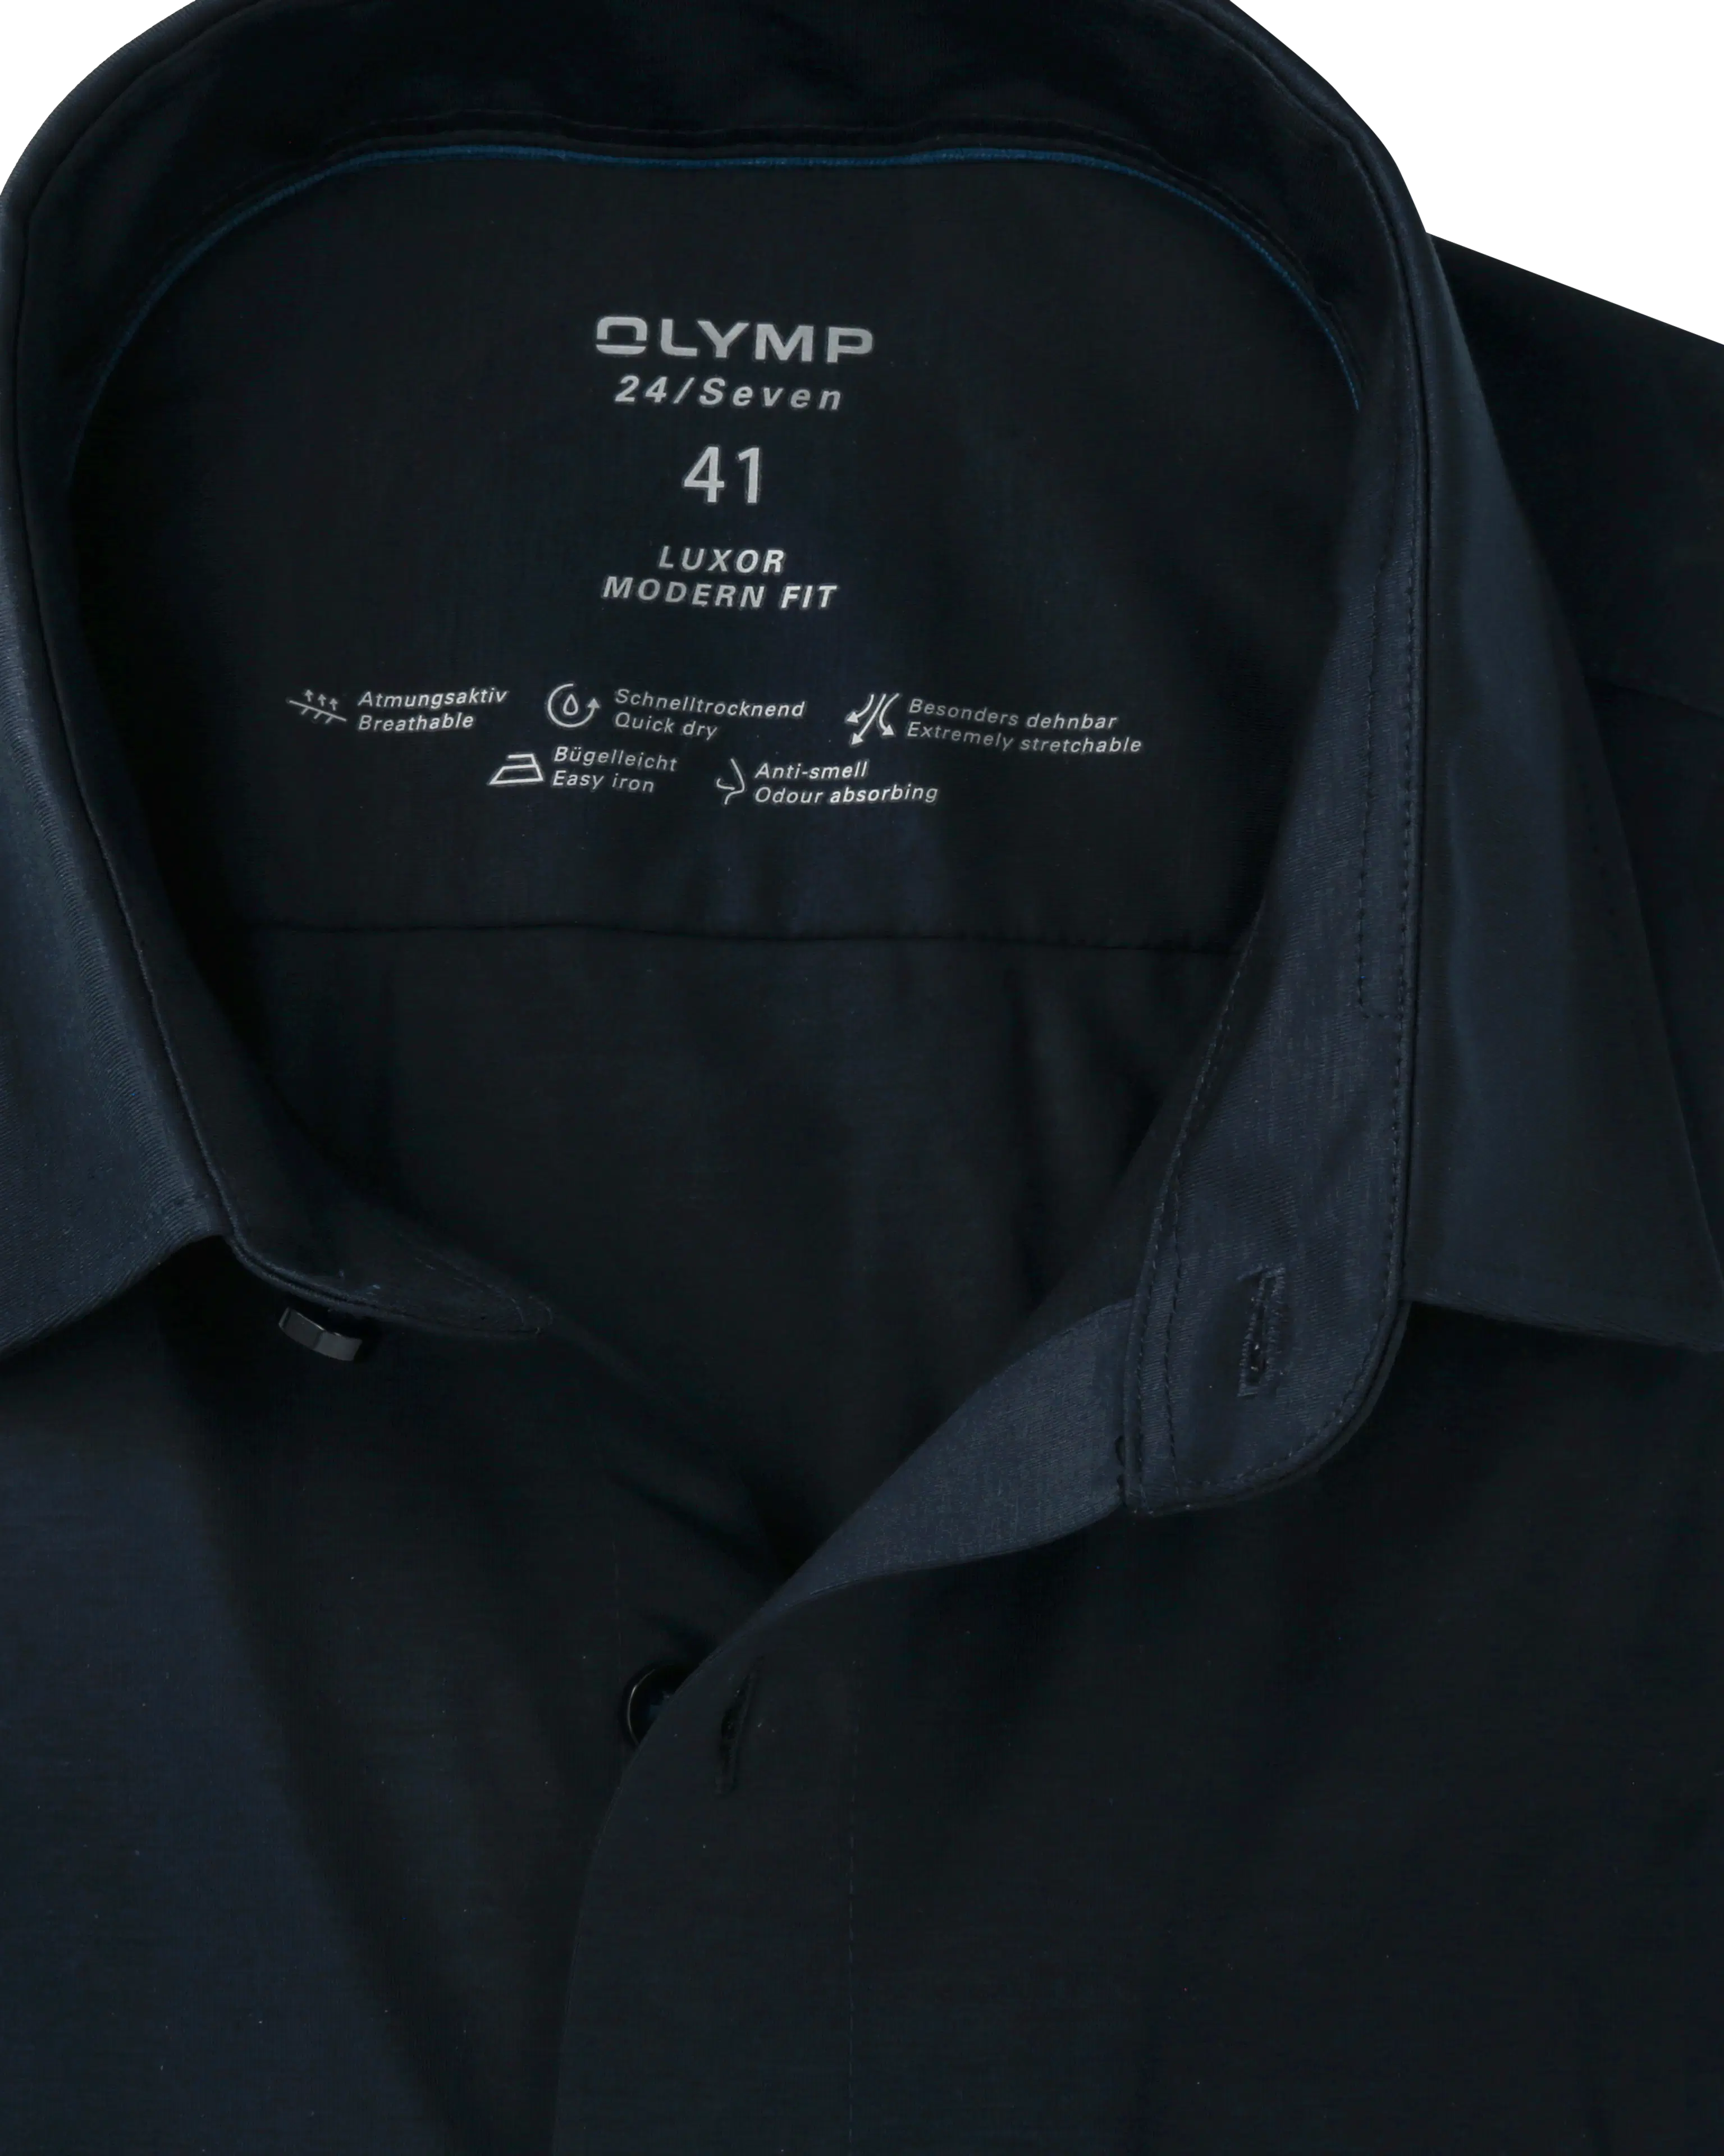 Olymp Luxor Modern Fit Jersey kauluspaita